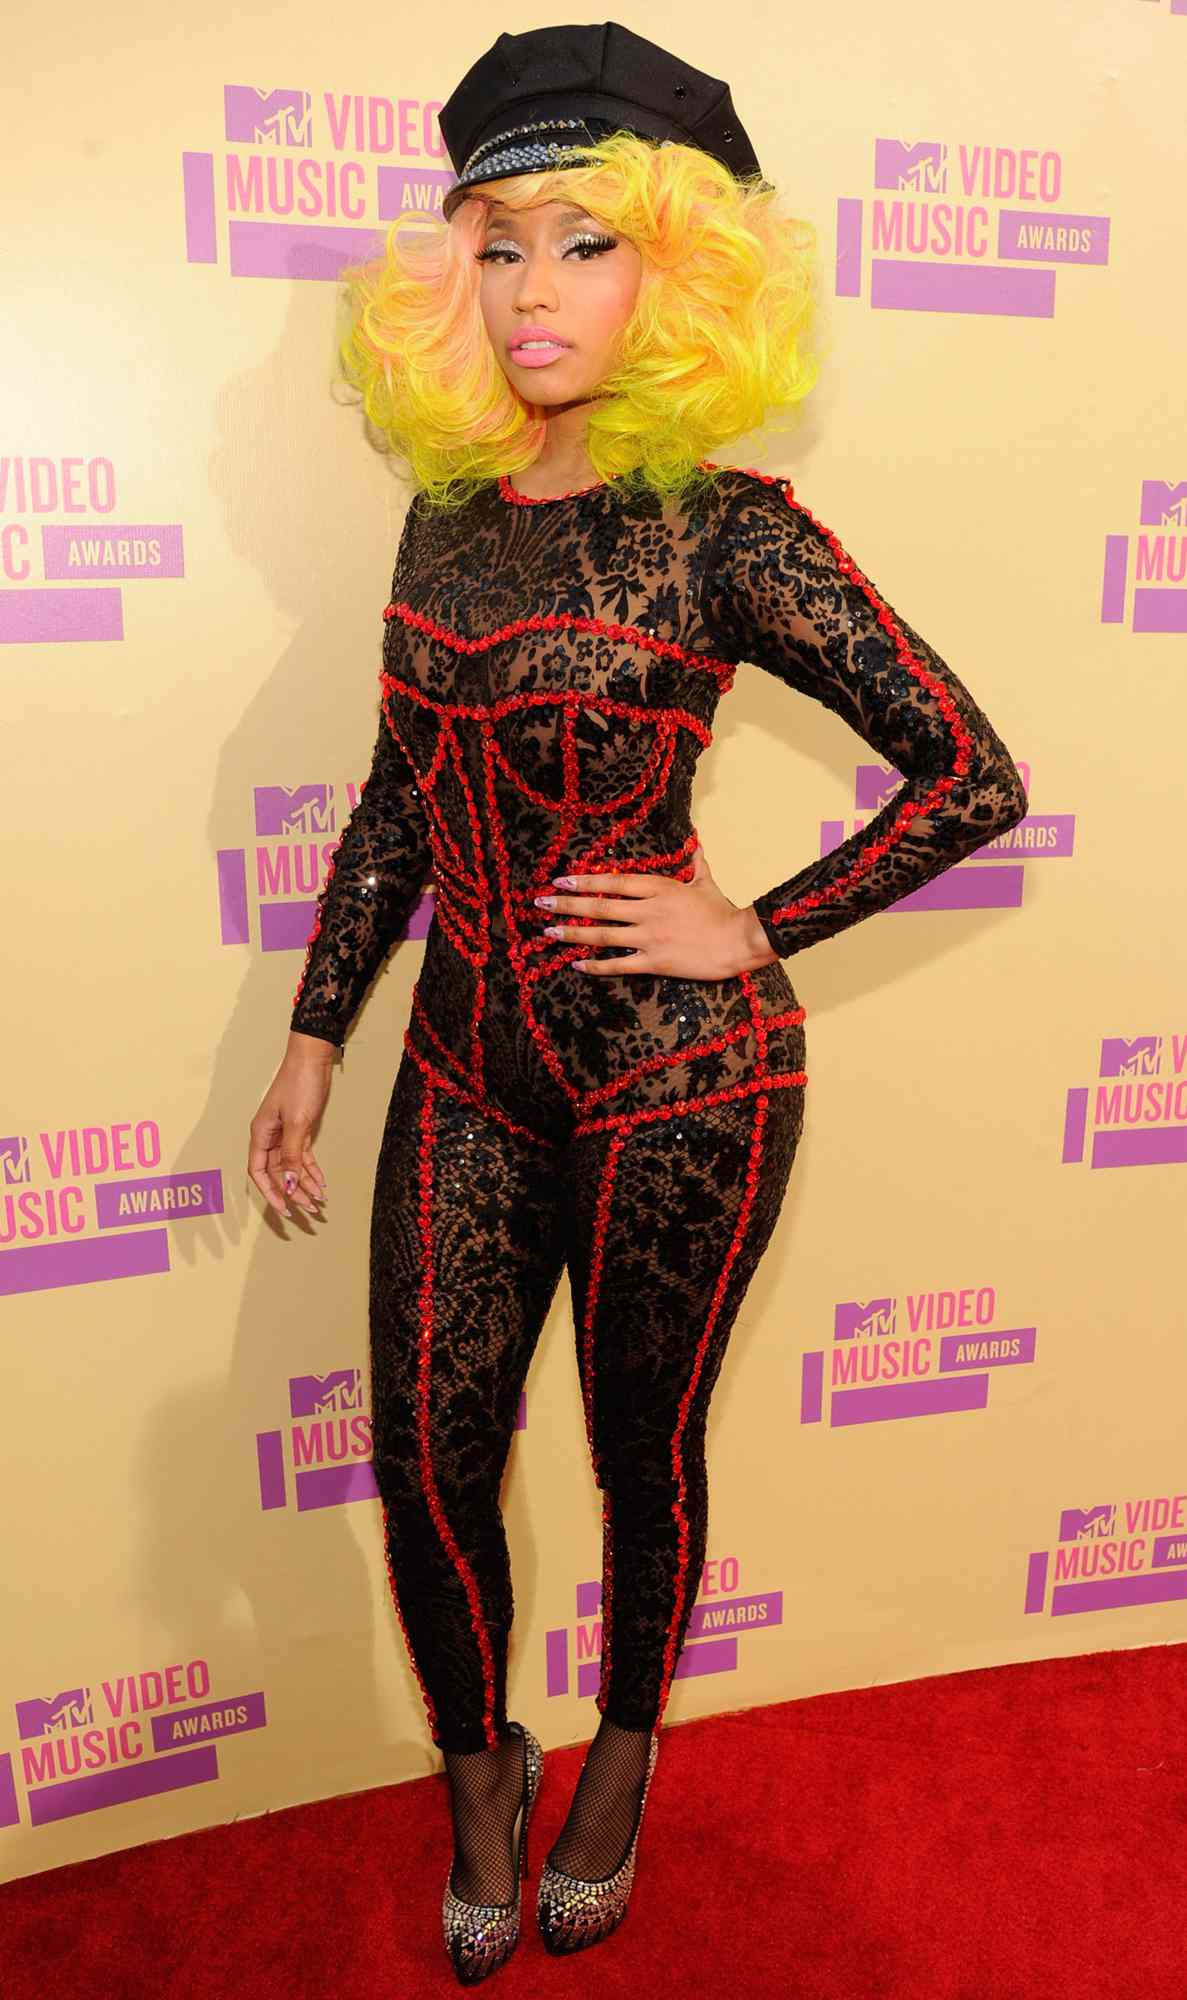 Nicki Minaj arrives at the 2012 MTV Video Music Awards at Staples Center on September 6, 2012 in Los Angeles, California